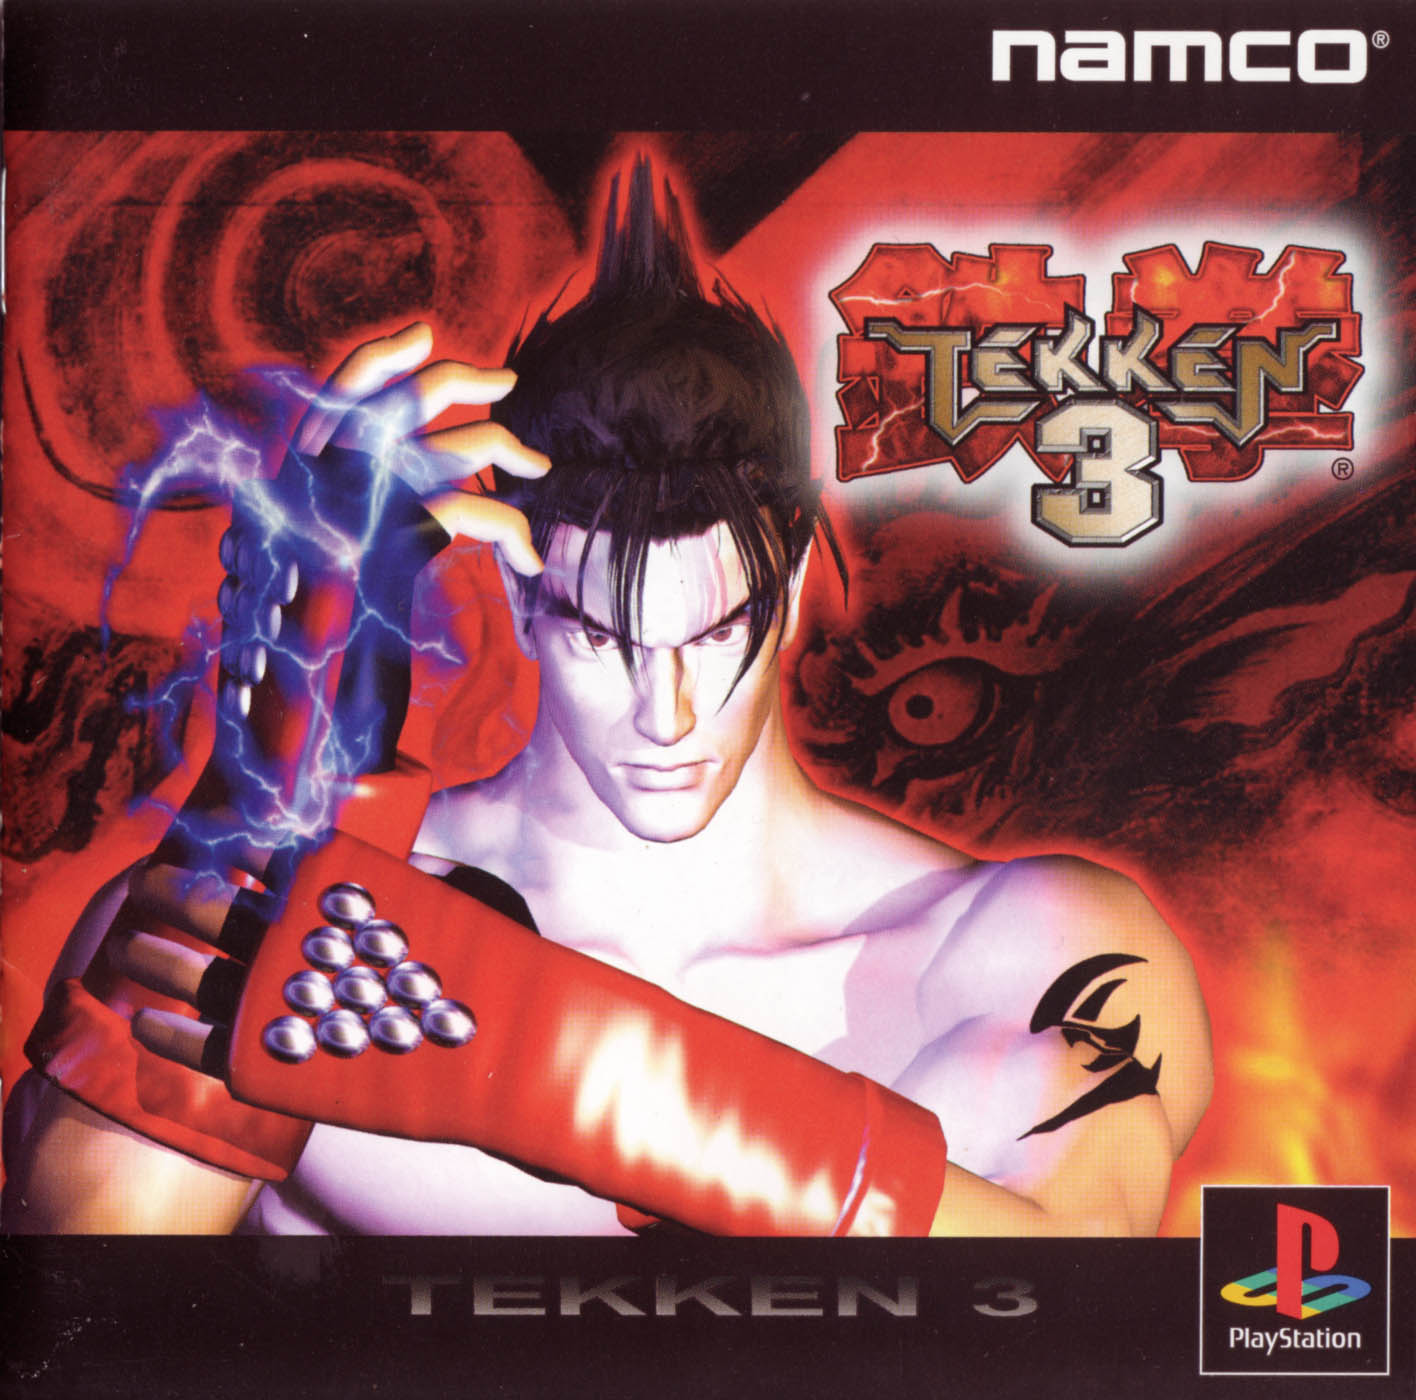 Tekken playstation. Tekken 3 PLAYSTATION обложка. Sony PLAYSTATION 1 теккен 3. Обложка Tekken PLAYSTATION 1. Tekken 3 ps1 обложка.